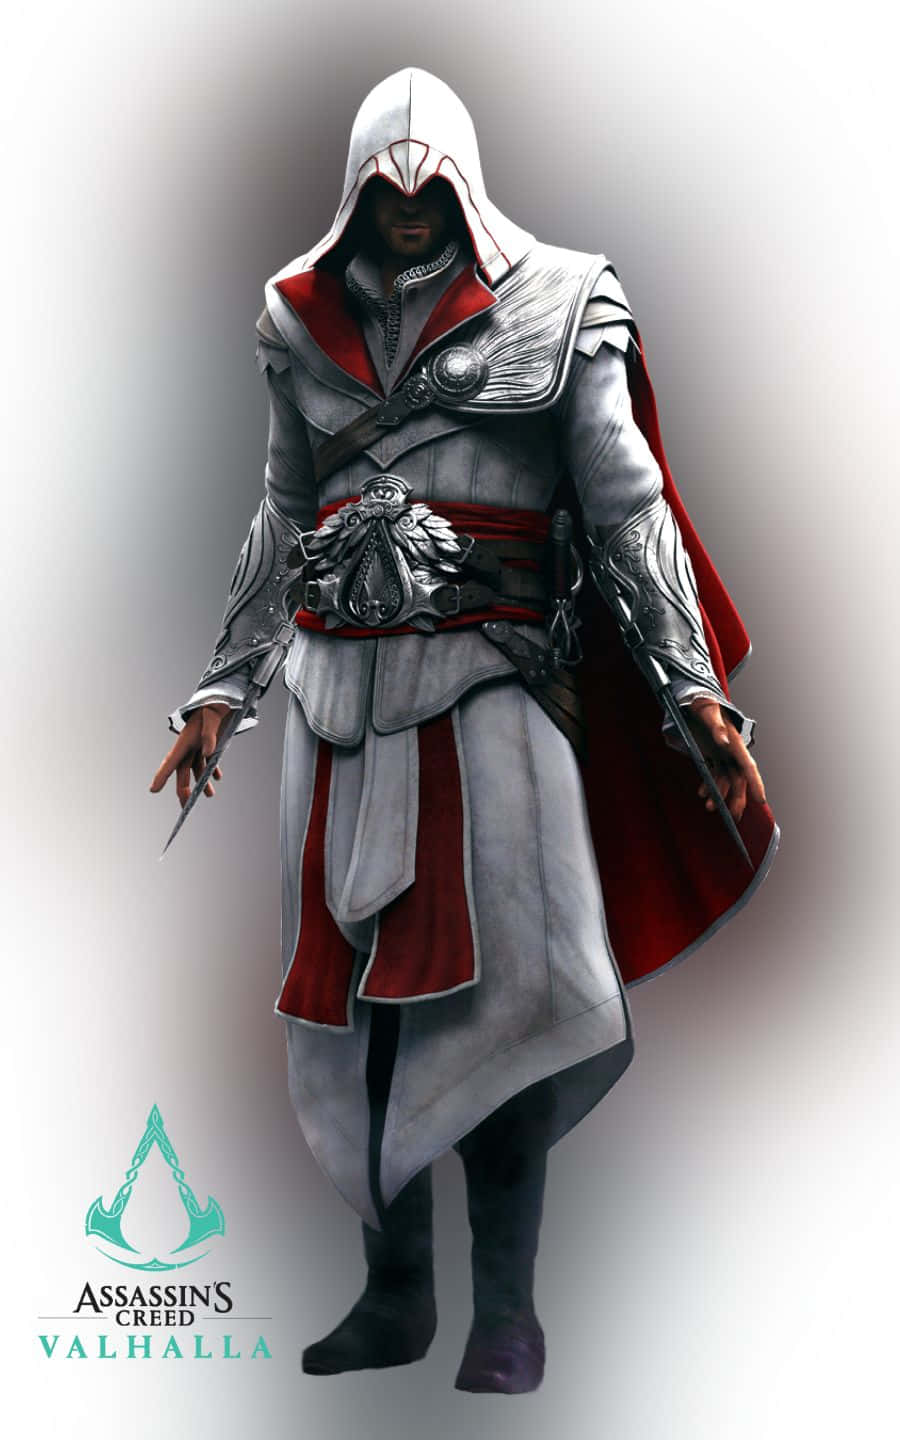 Ezioauditore 1440p Assassin's Creed Valhalla Hintergrund